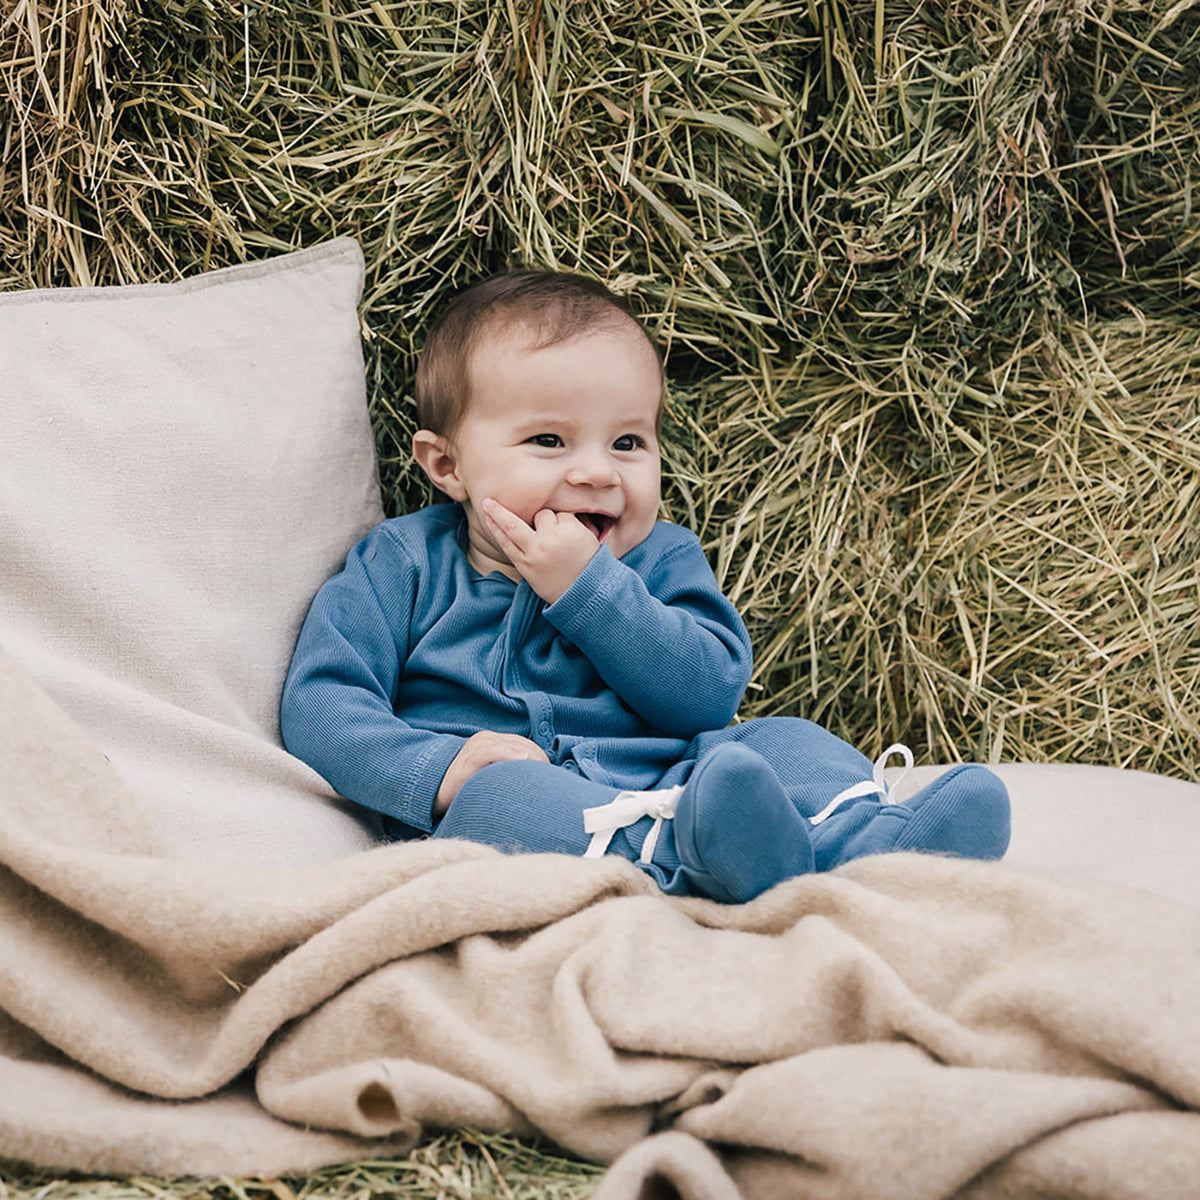 baby on blanket against hay bales wearing uaua romper with baby booties in azul